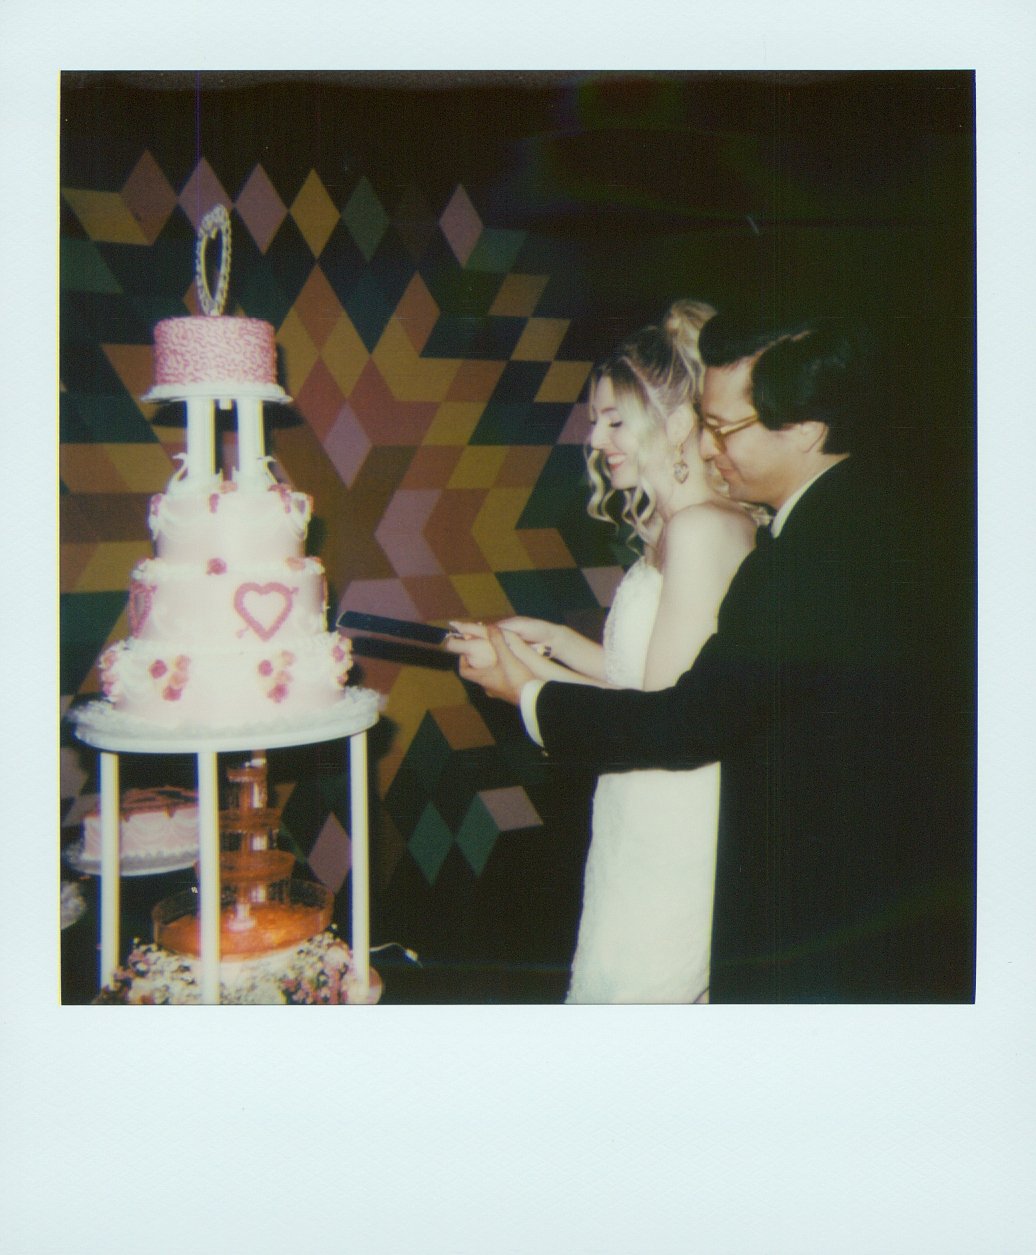 Wedding-taken-on-polaroids8.jpg